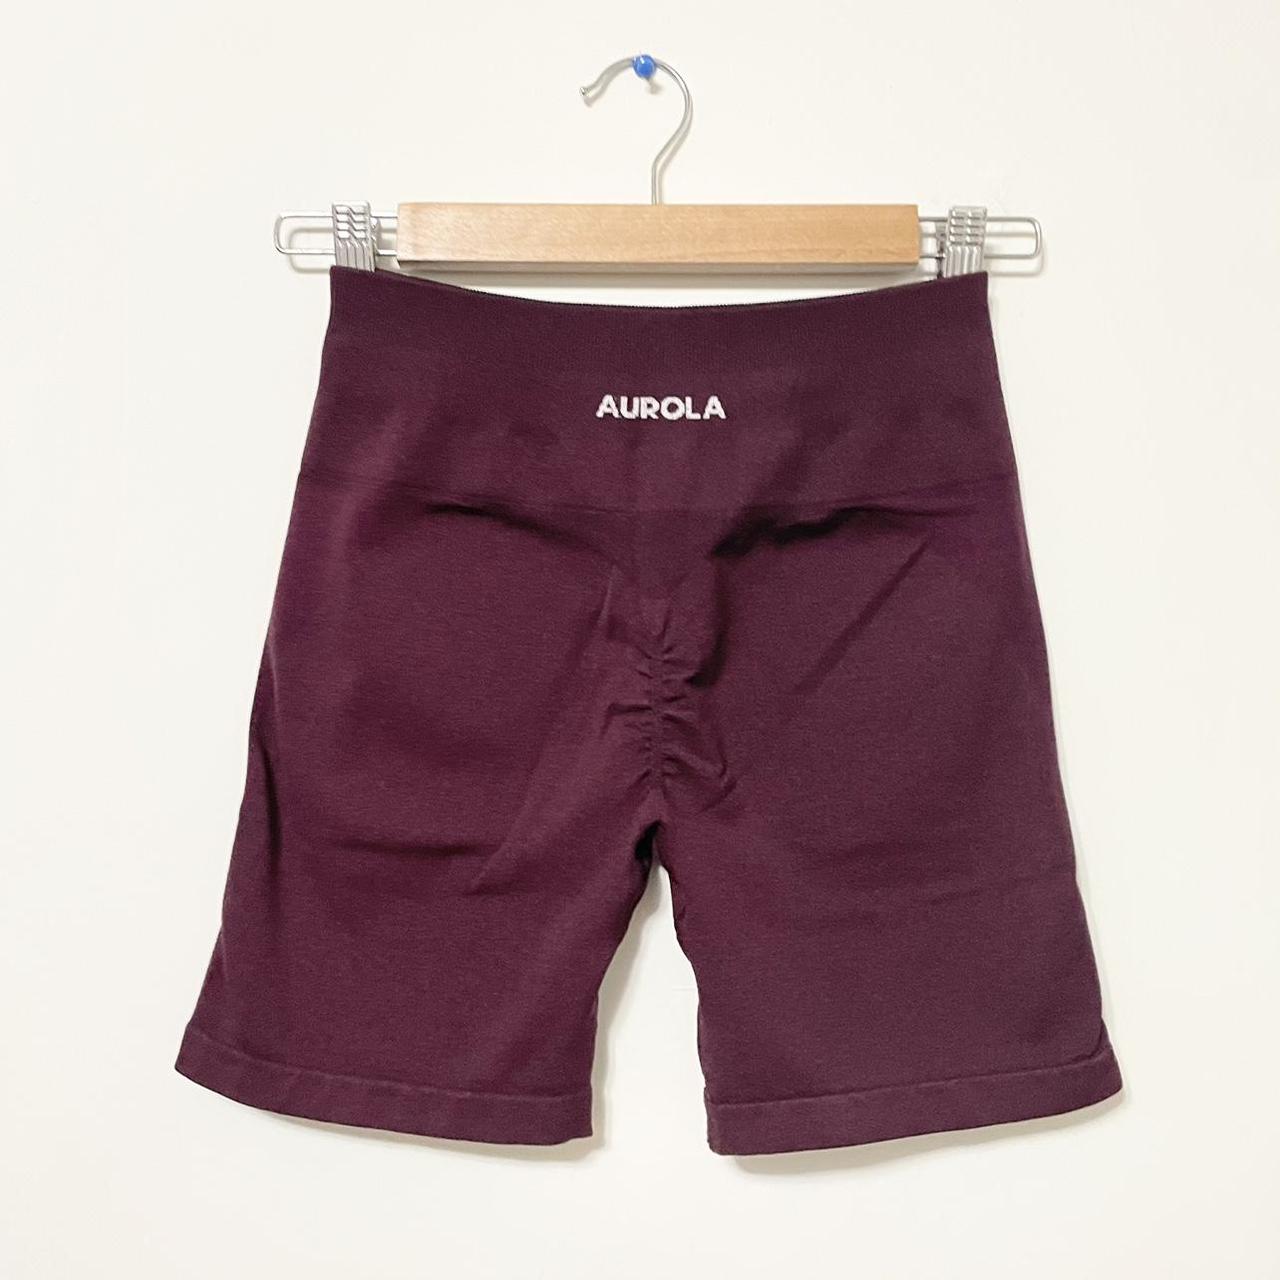 Aurola Workout Shorts Breathable Color: dark - Depop